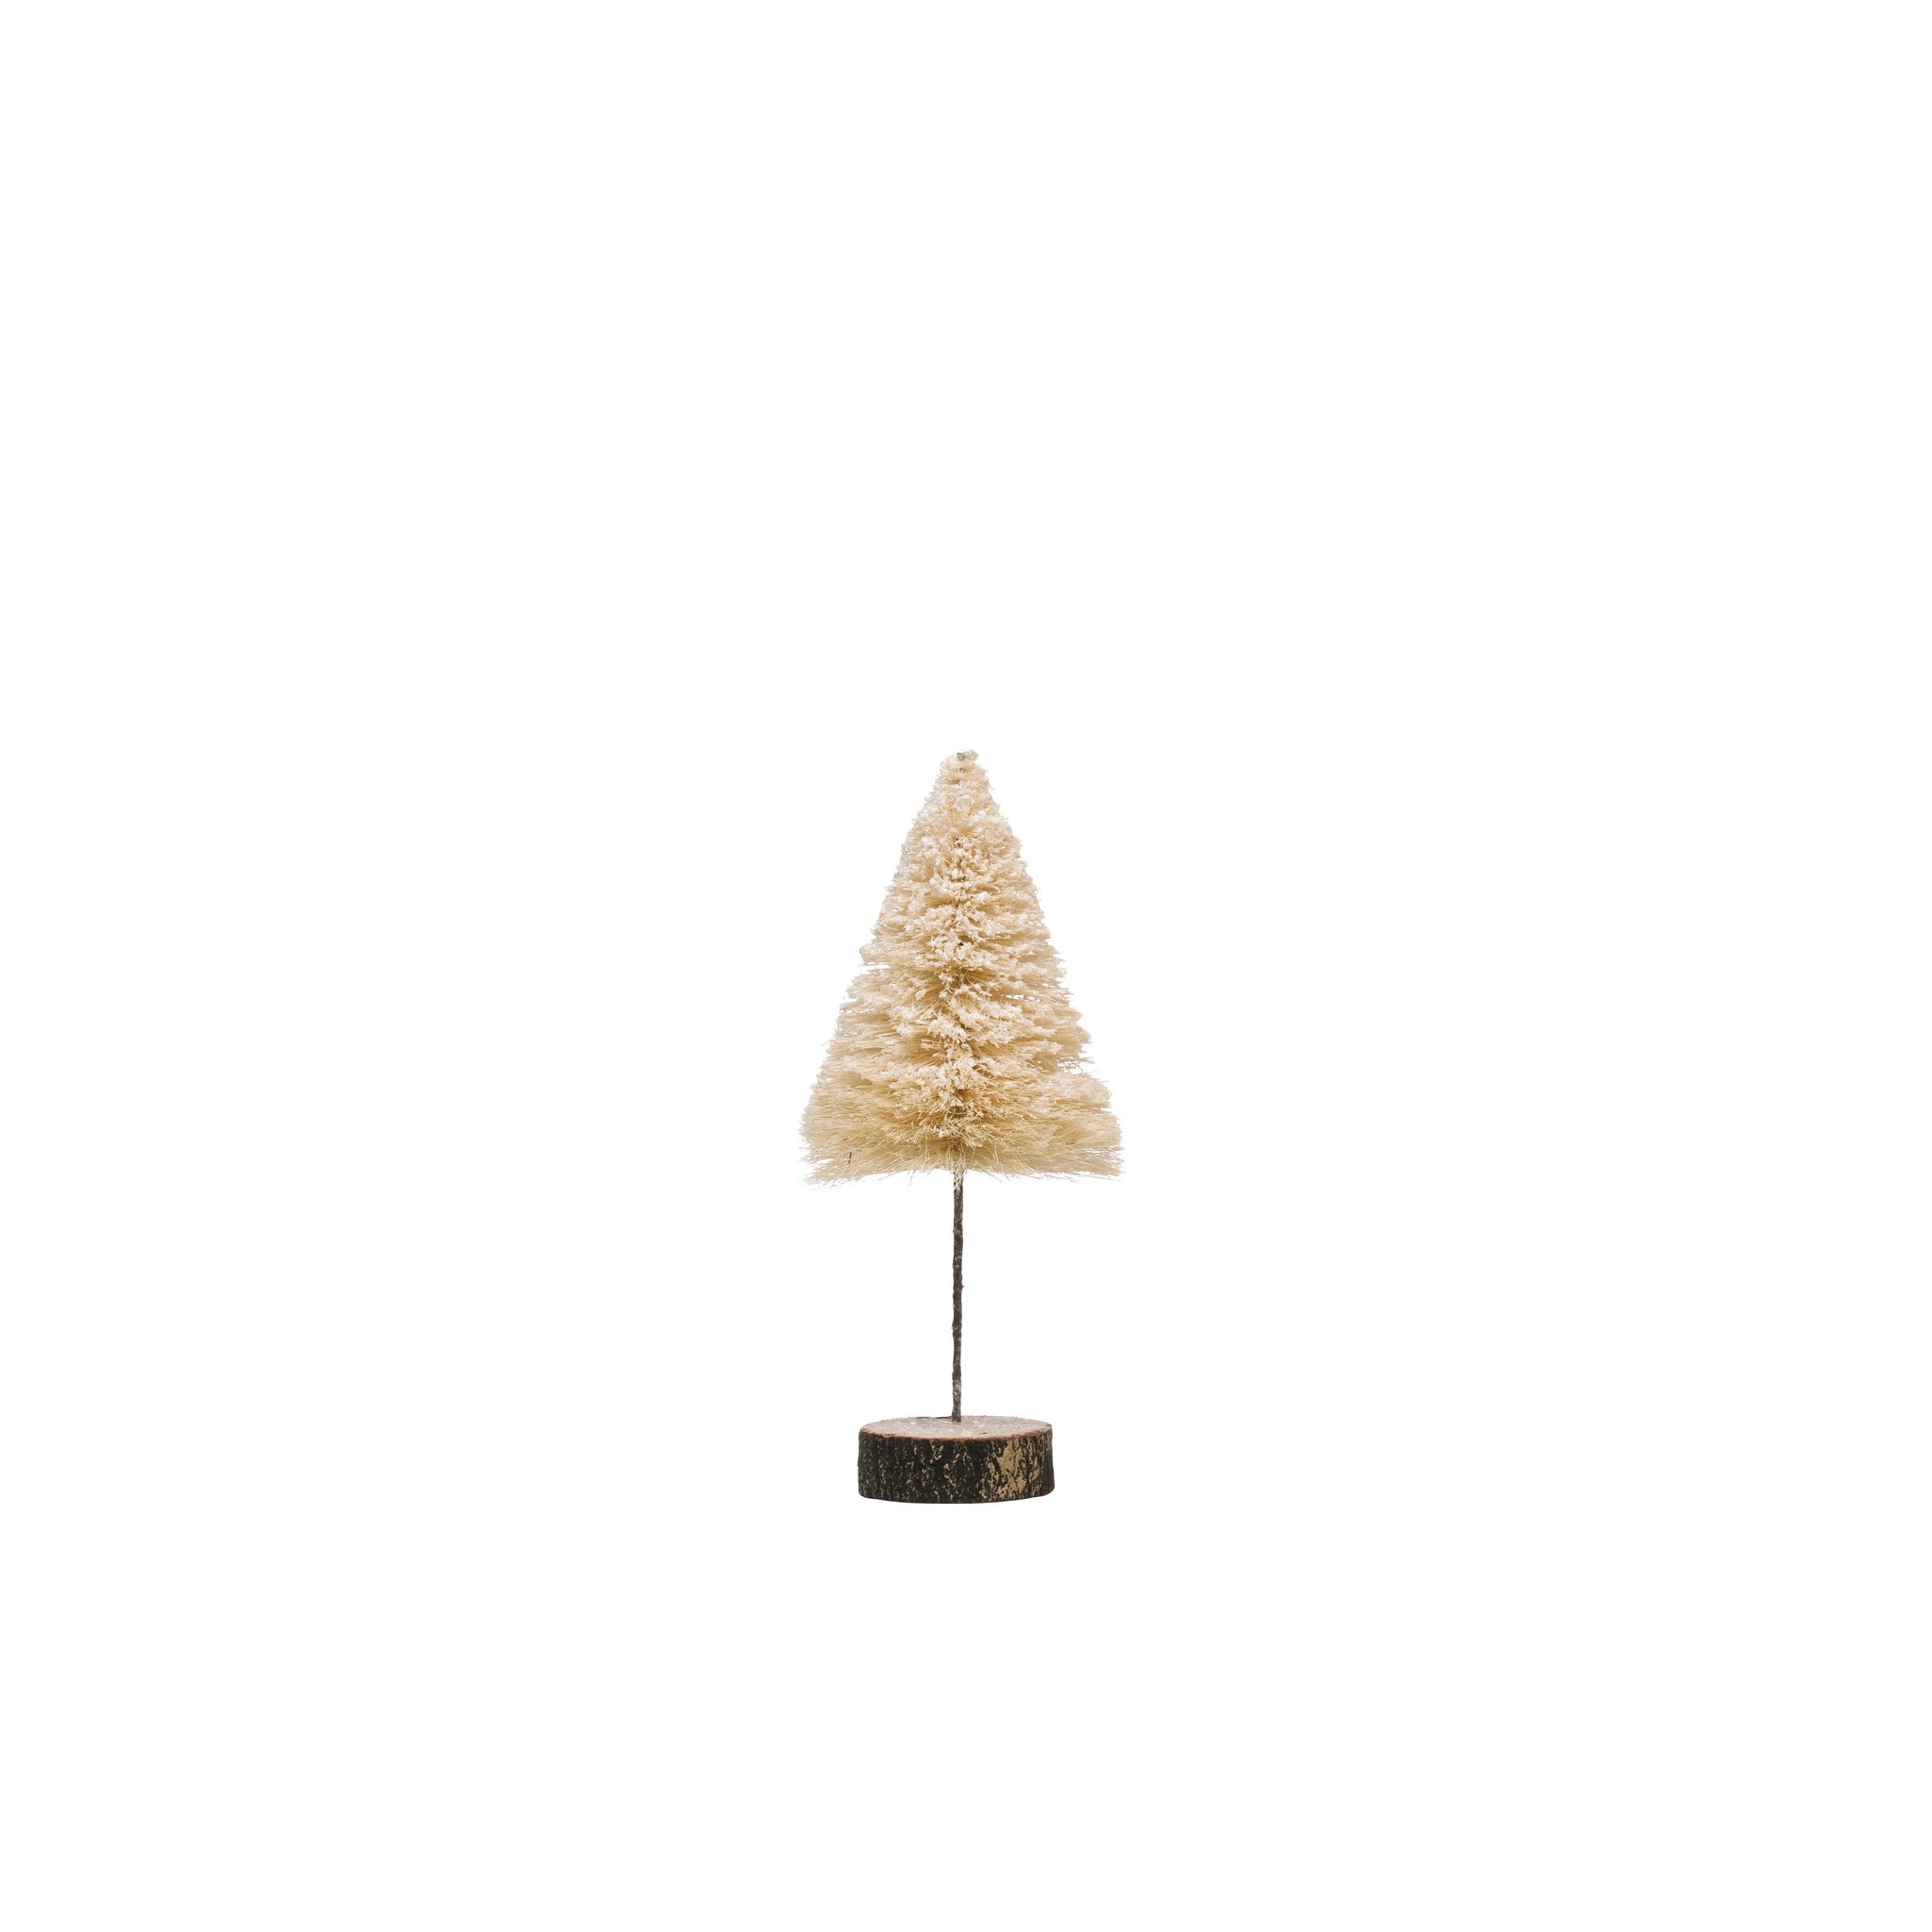 Bottle Brush Tree with Wood Slice Base, Cream Color